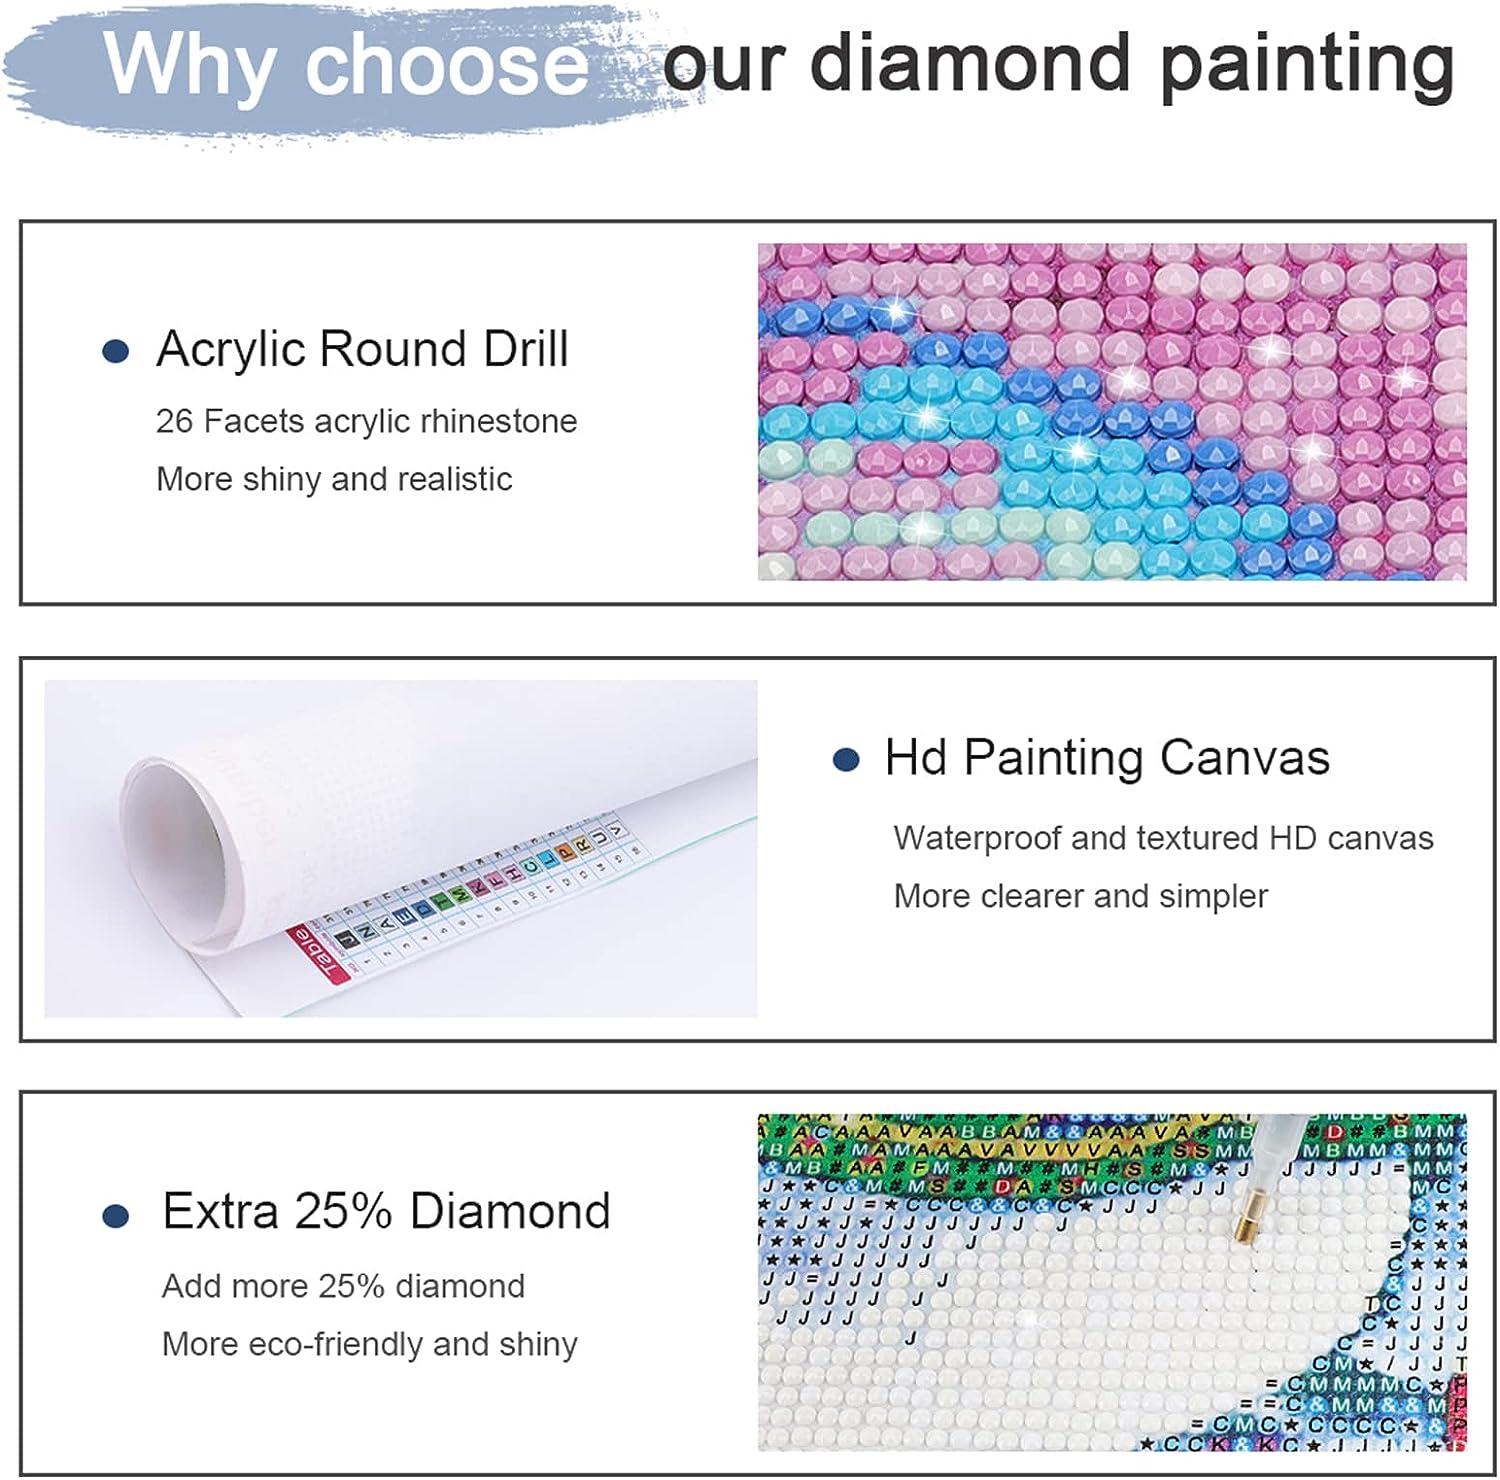 Always Be A Friend, 5D Diamond Painting Kits